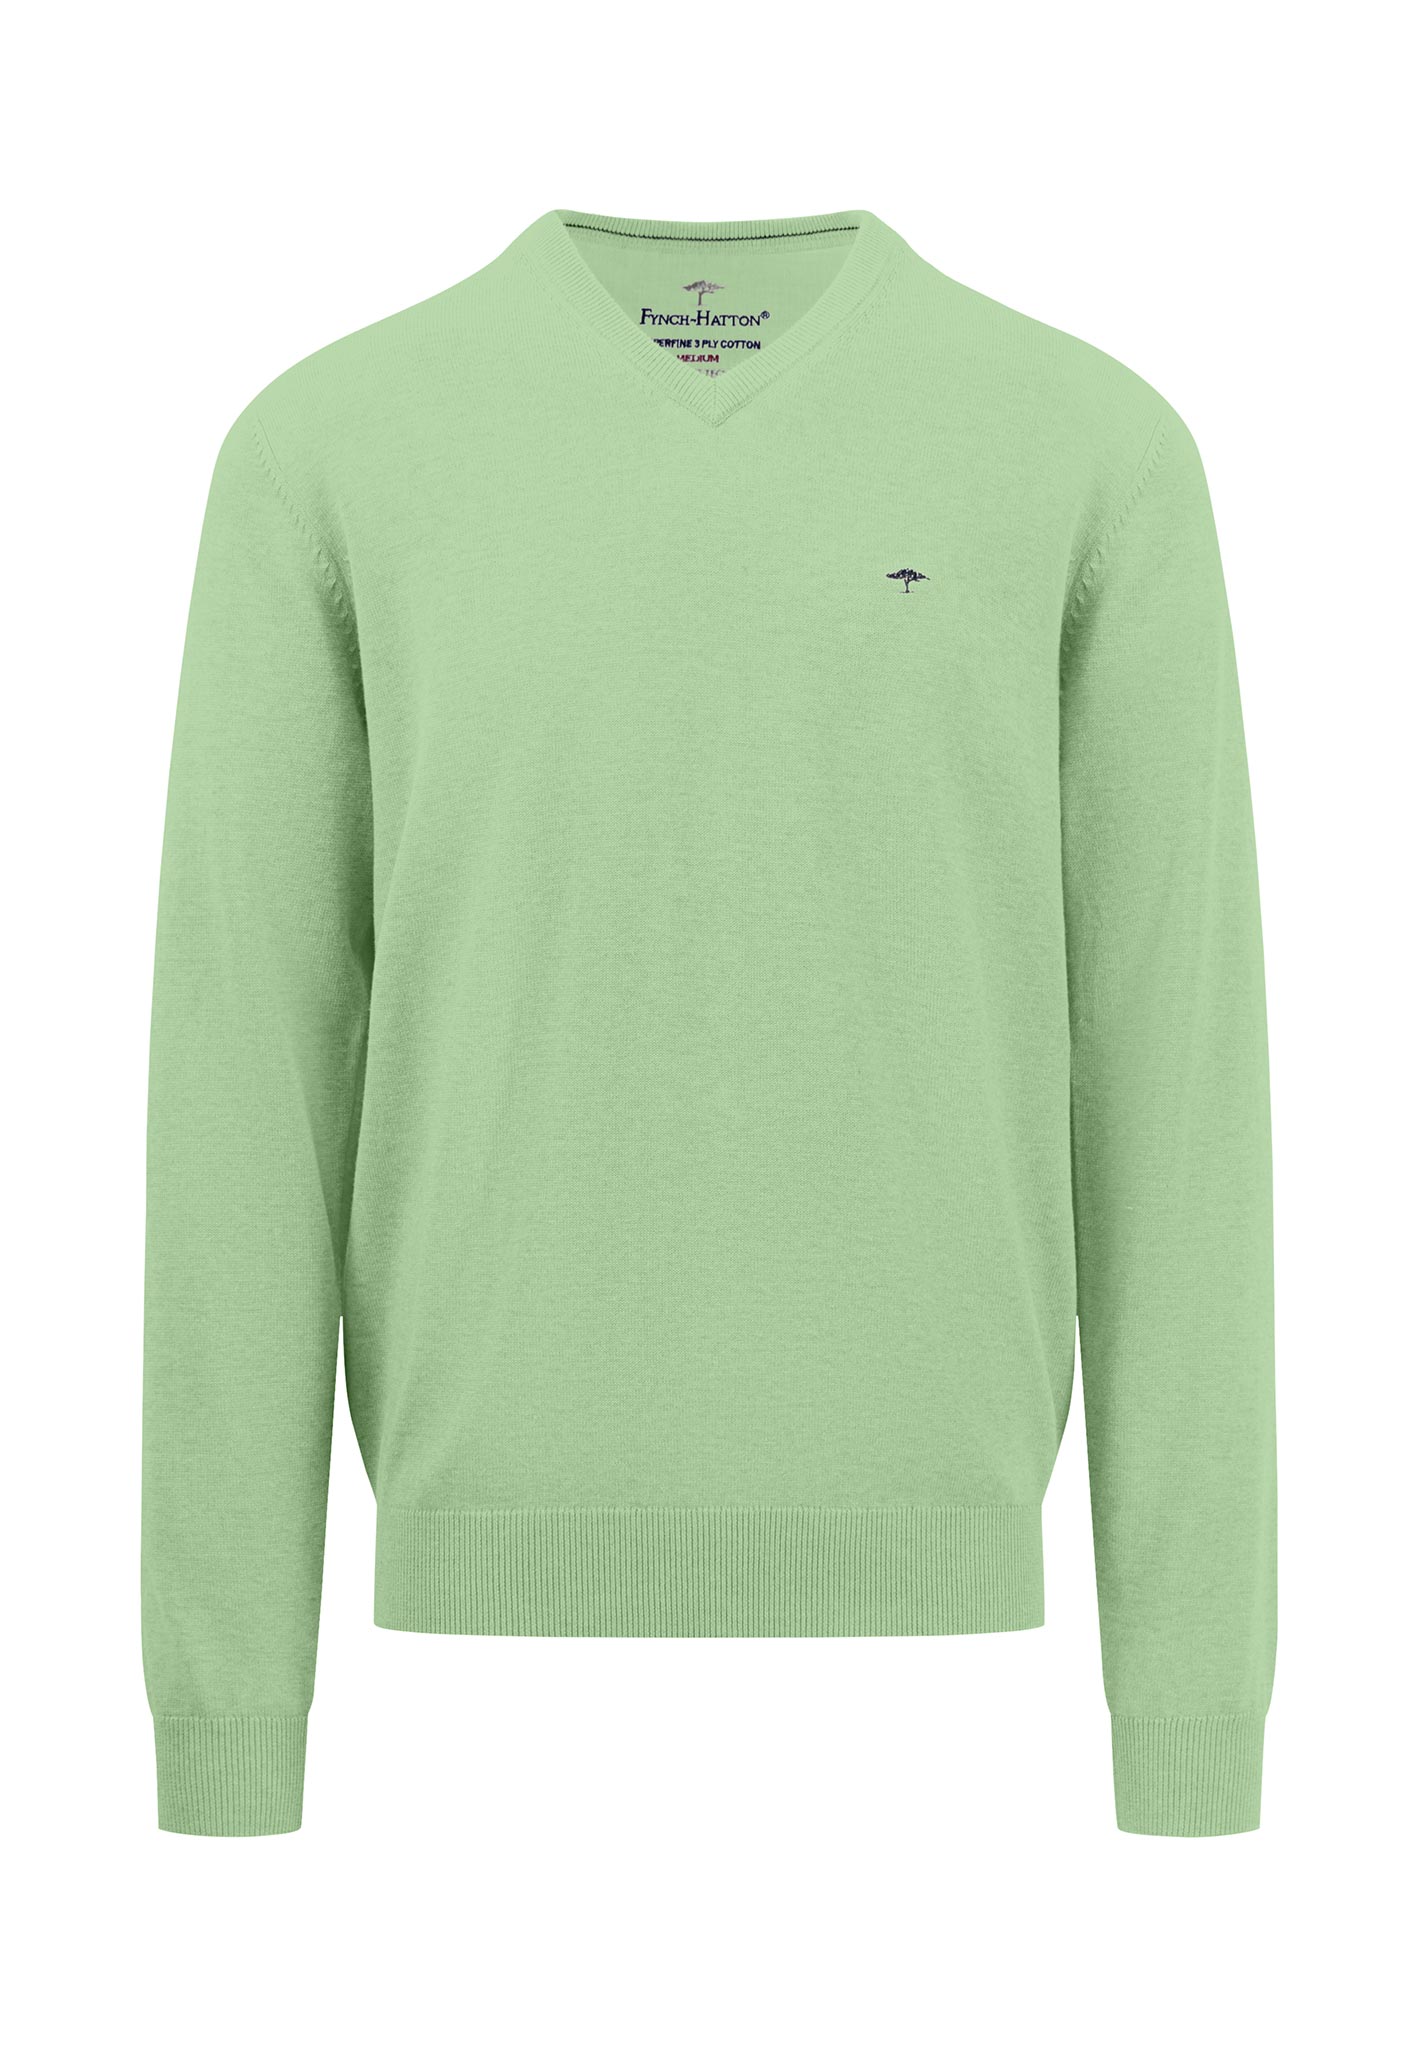 Fynch Hatton V-Neck Knitwear - Soft Green